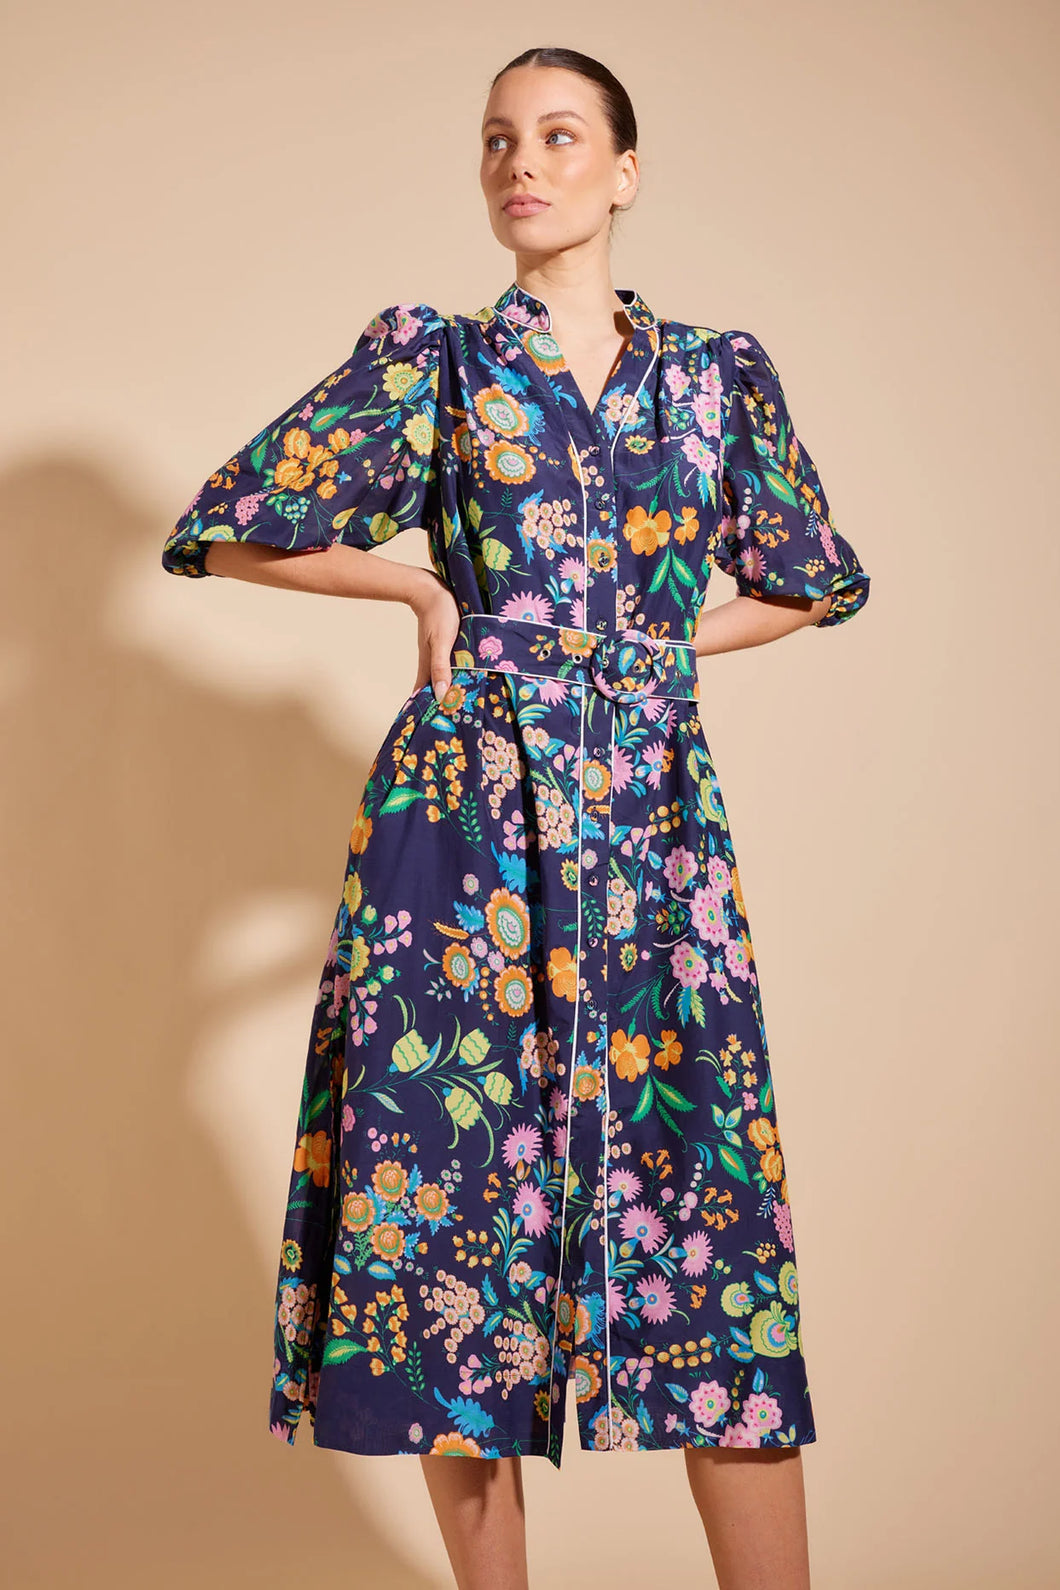 Lyon Cotton Silk Dress in Navy Rosa's Garden Print by Alessandra